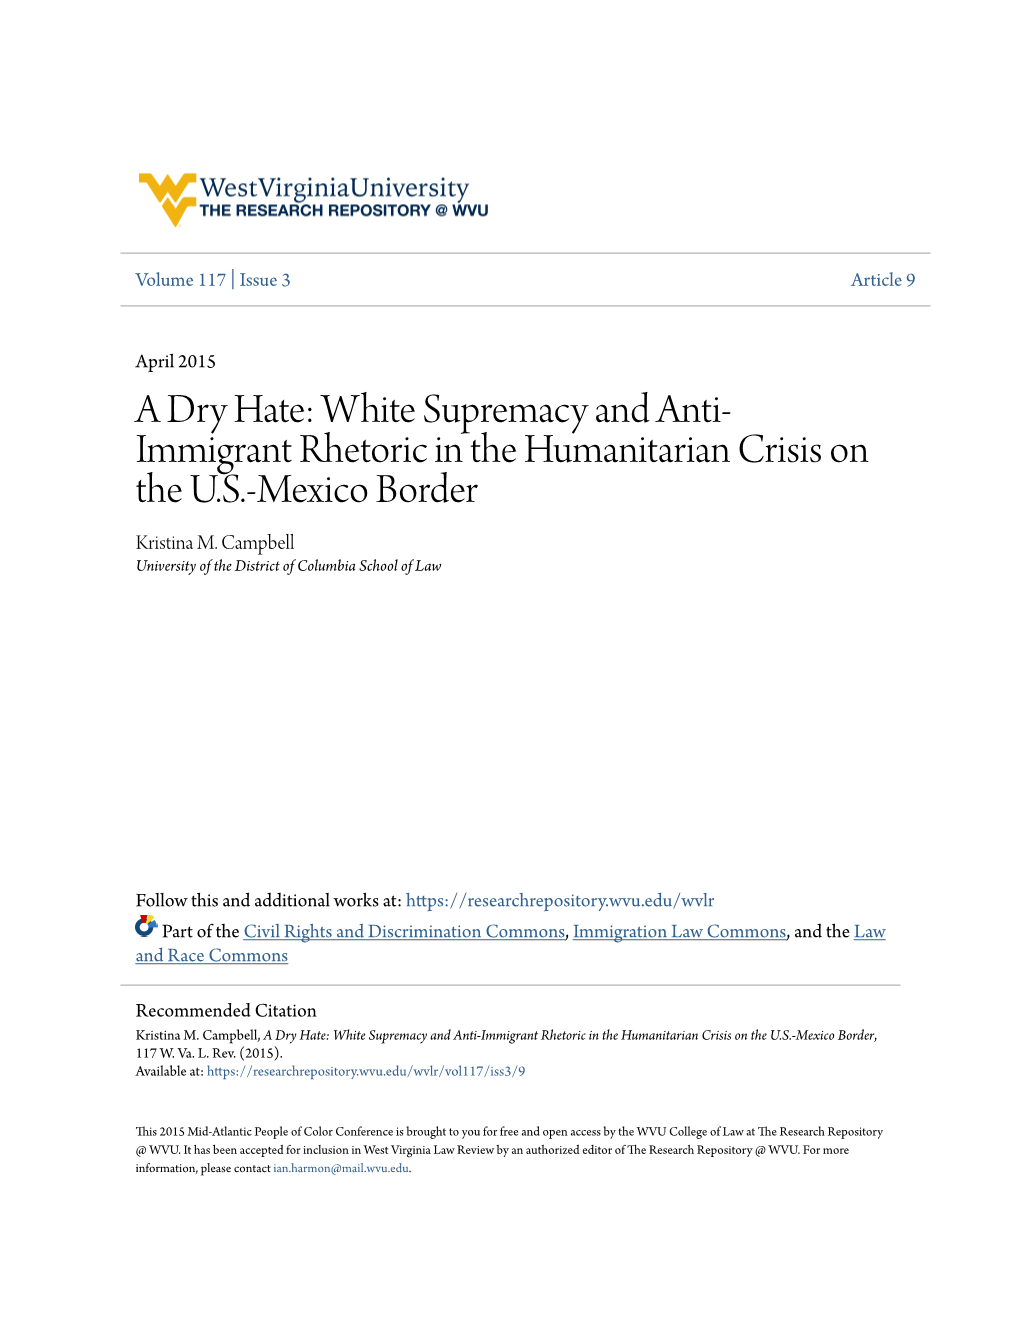 White Supremacy and Anti-Immigrant Rhetoric in the Humanitarian Crisis on the U.S.-Mexico Border, 117 W